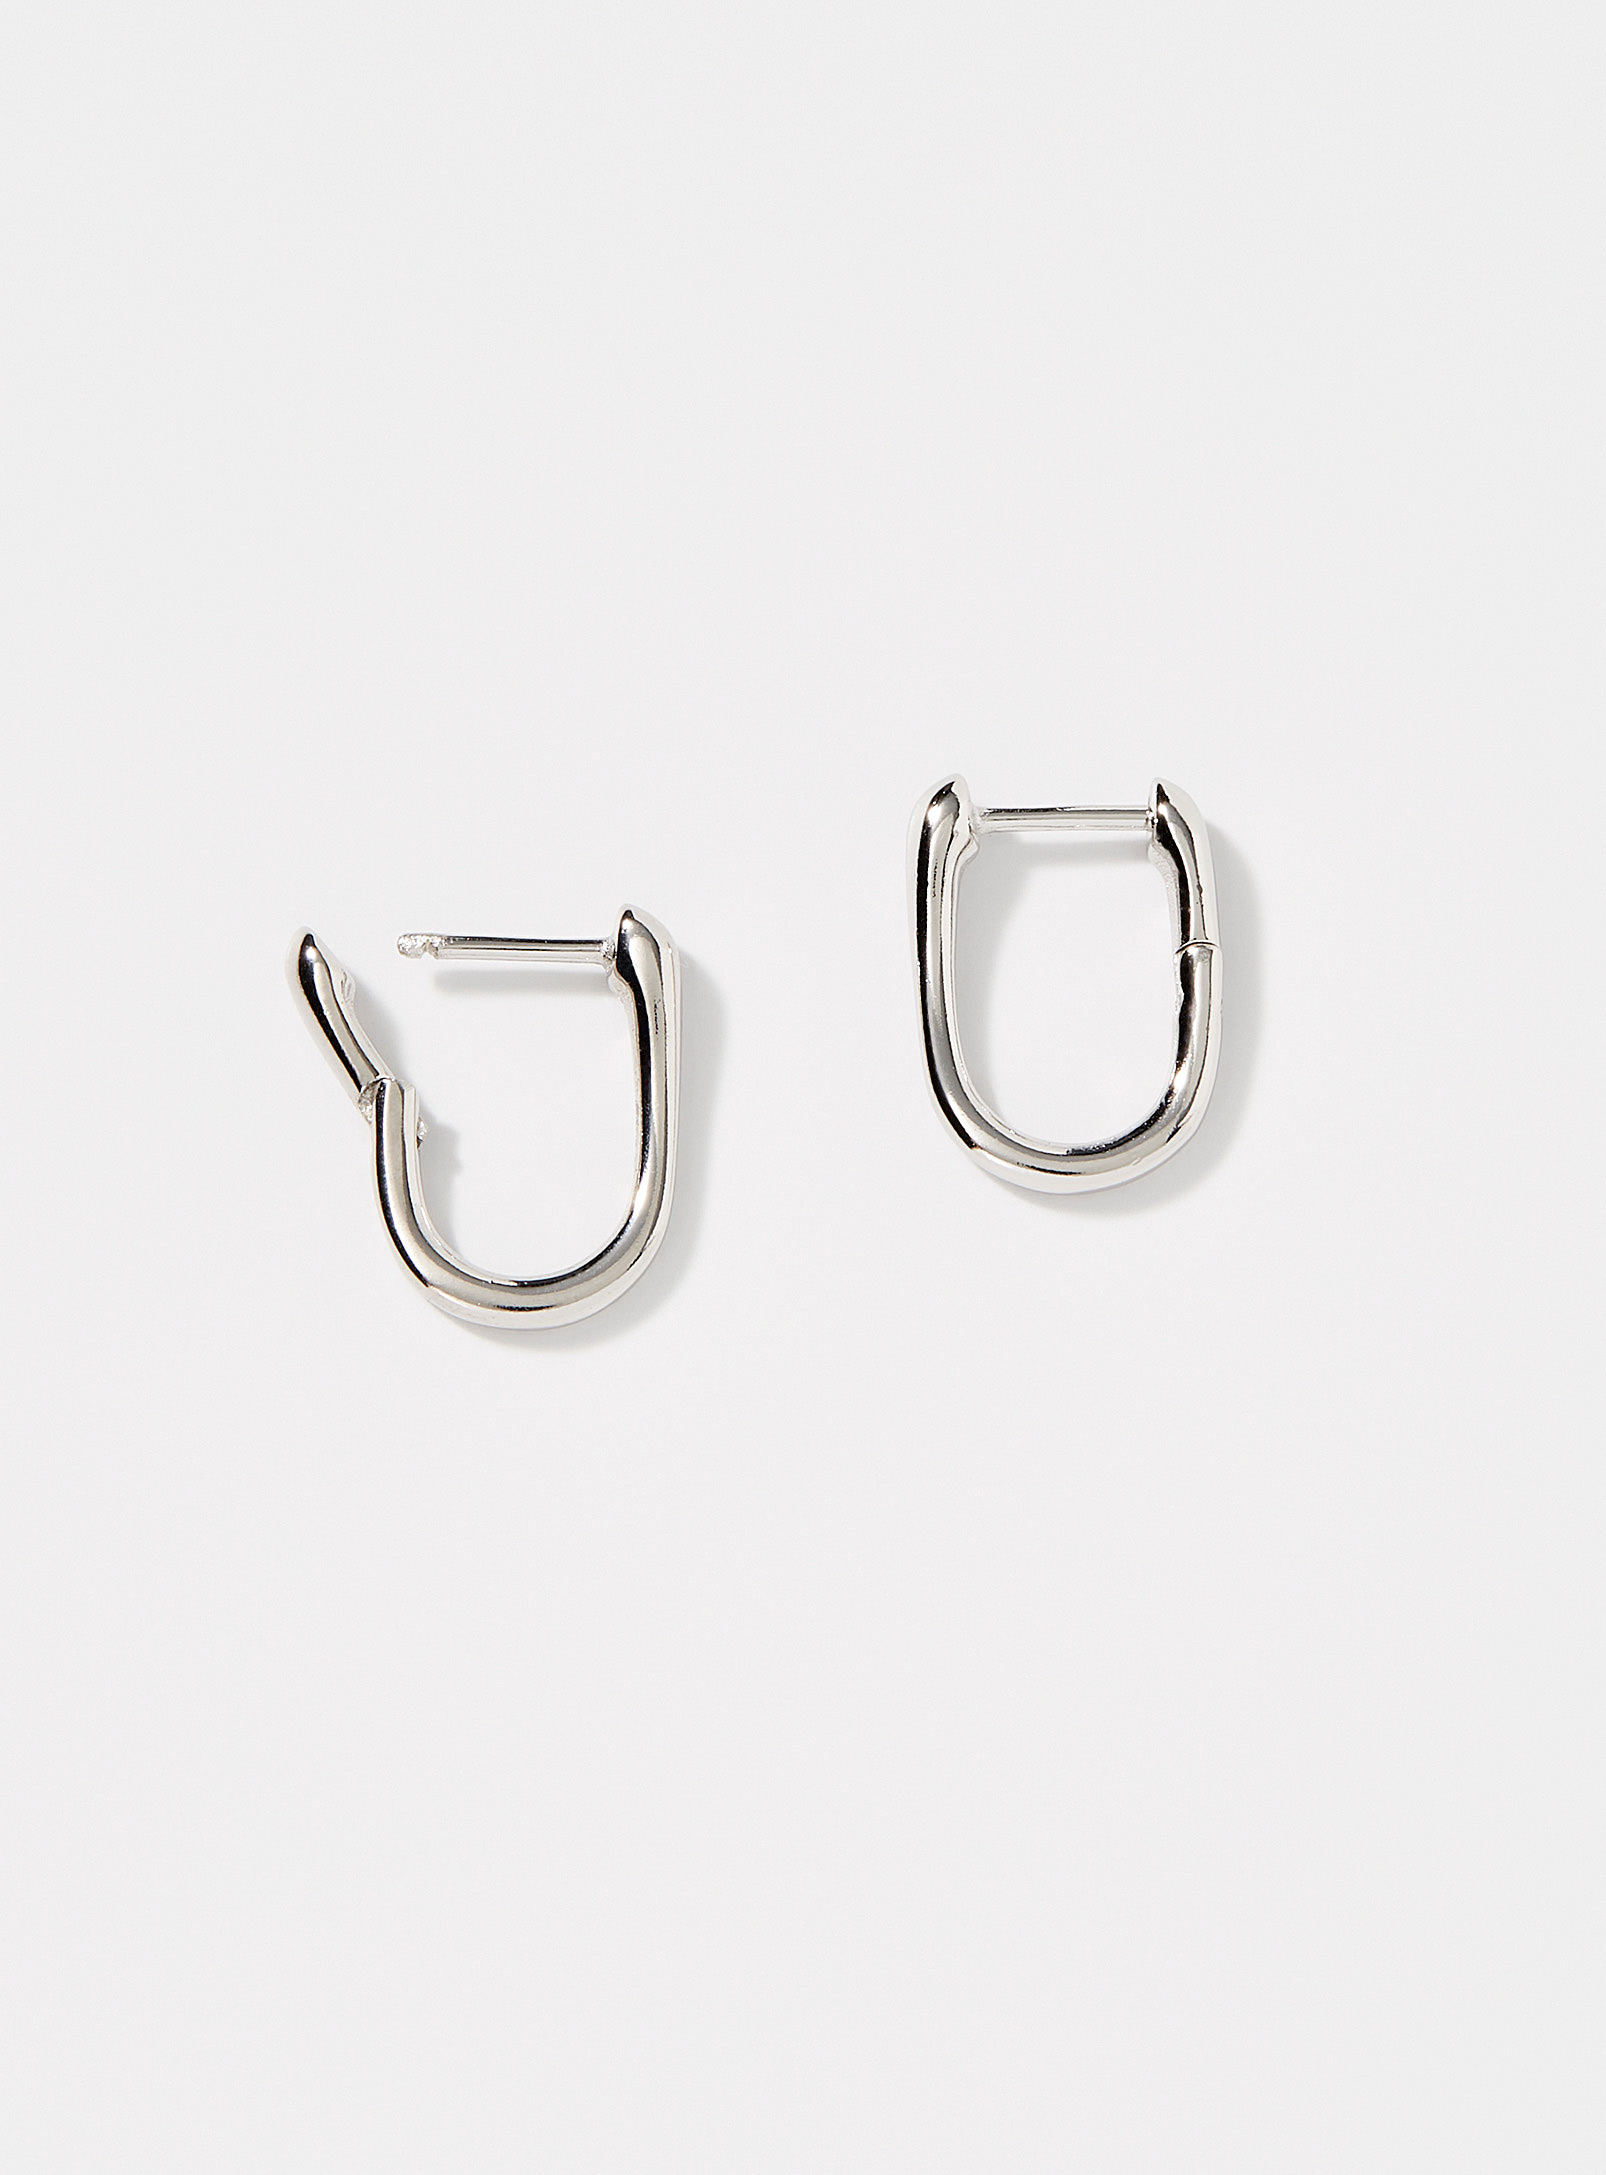 Simons - Women's U-shaped silver earrings